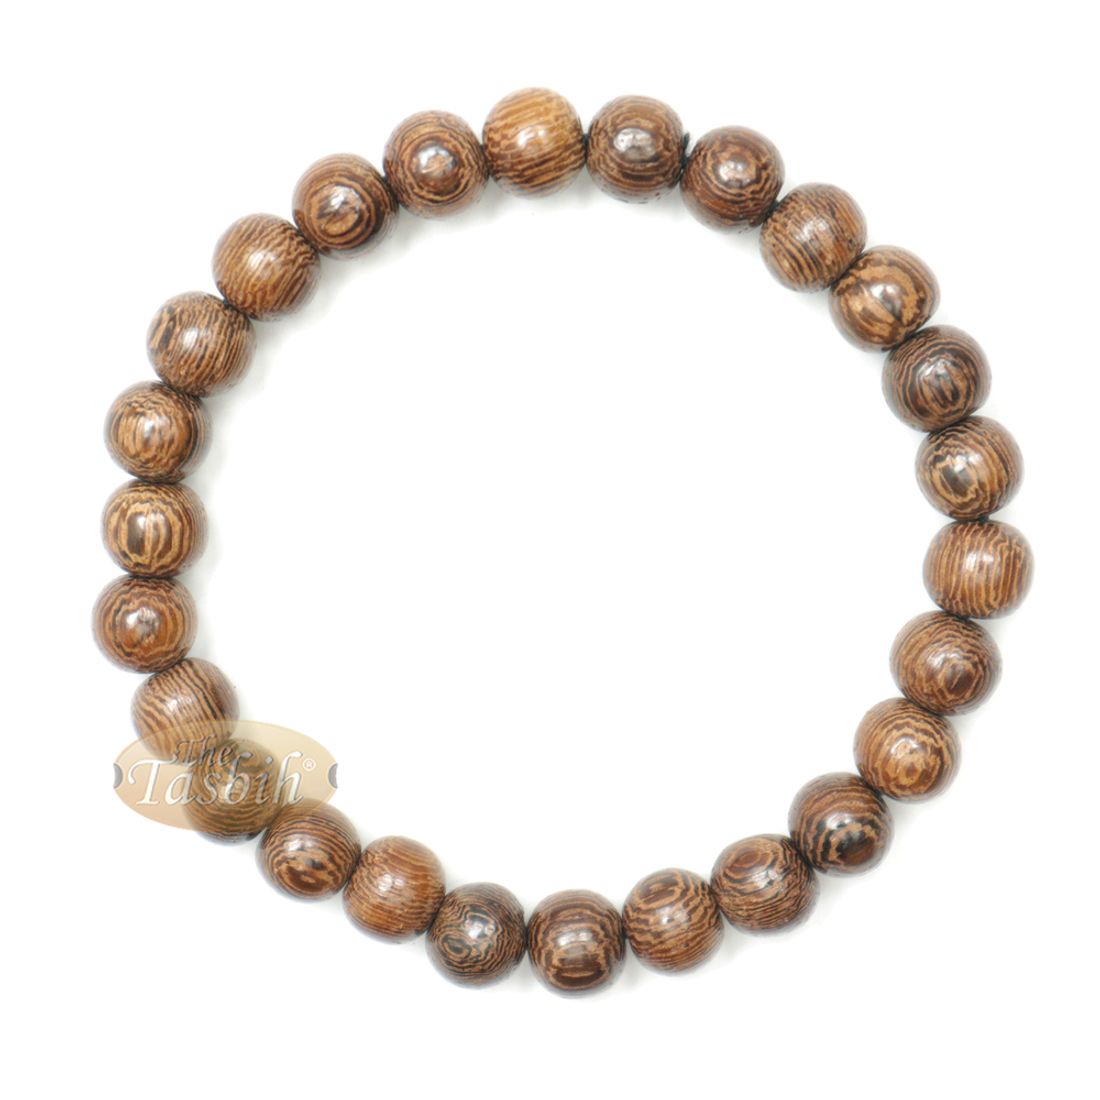 Wood Bead Bracelet – Tropical Johar Asian Wenge Beads with Black Elastic 7mm Unisex 7.5-8 inch Prayer Bracelet